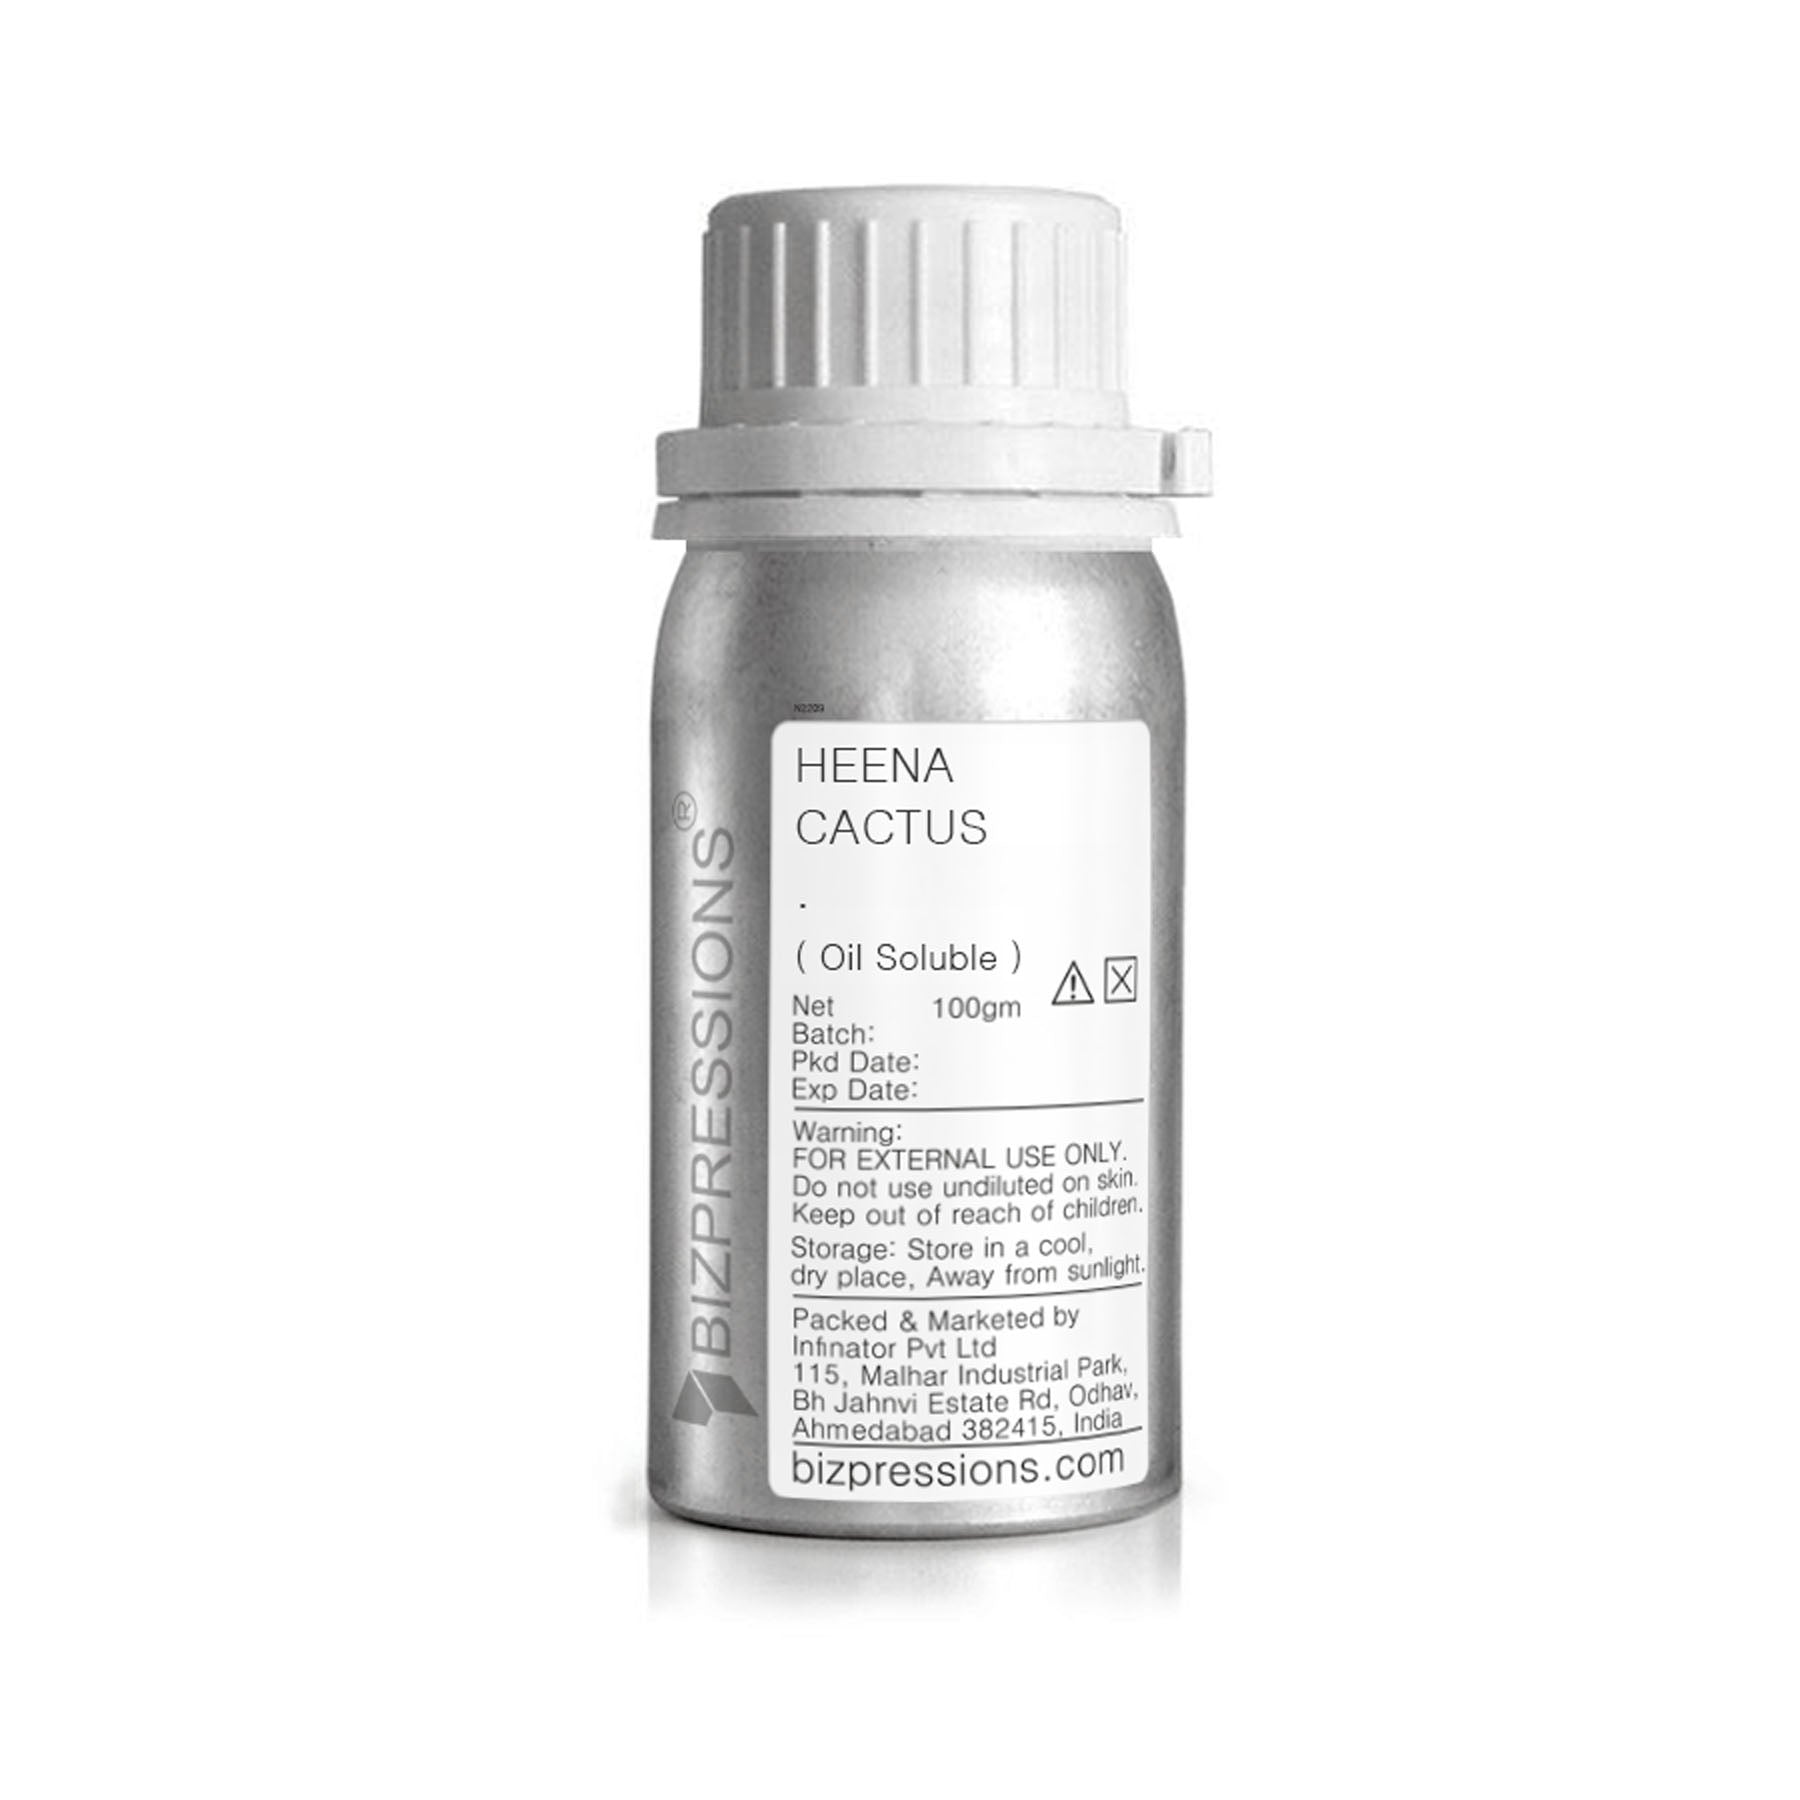 HEENA CACTUS - Fragrance ( Oil Soluble ) - 100 gm